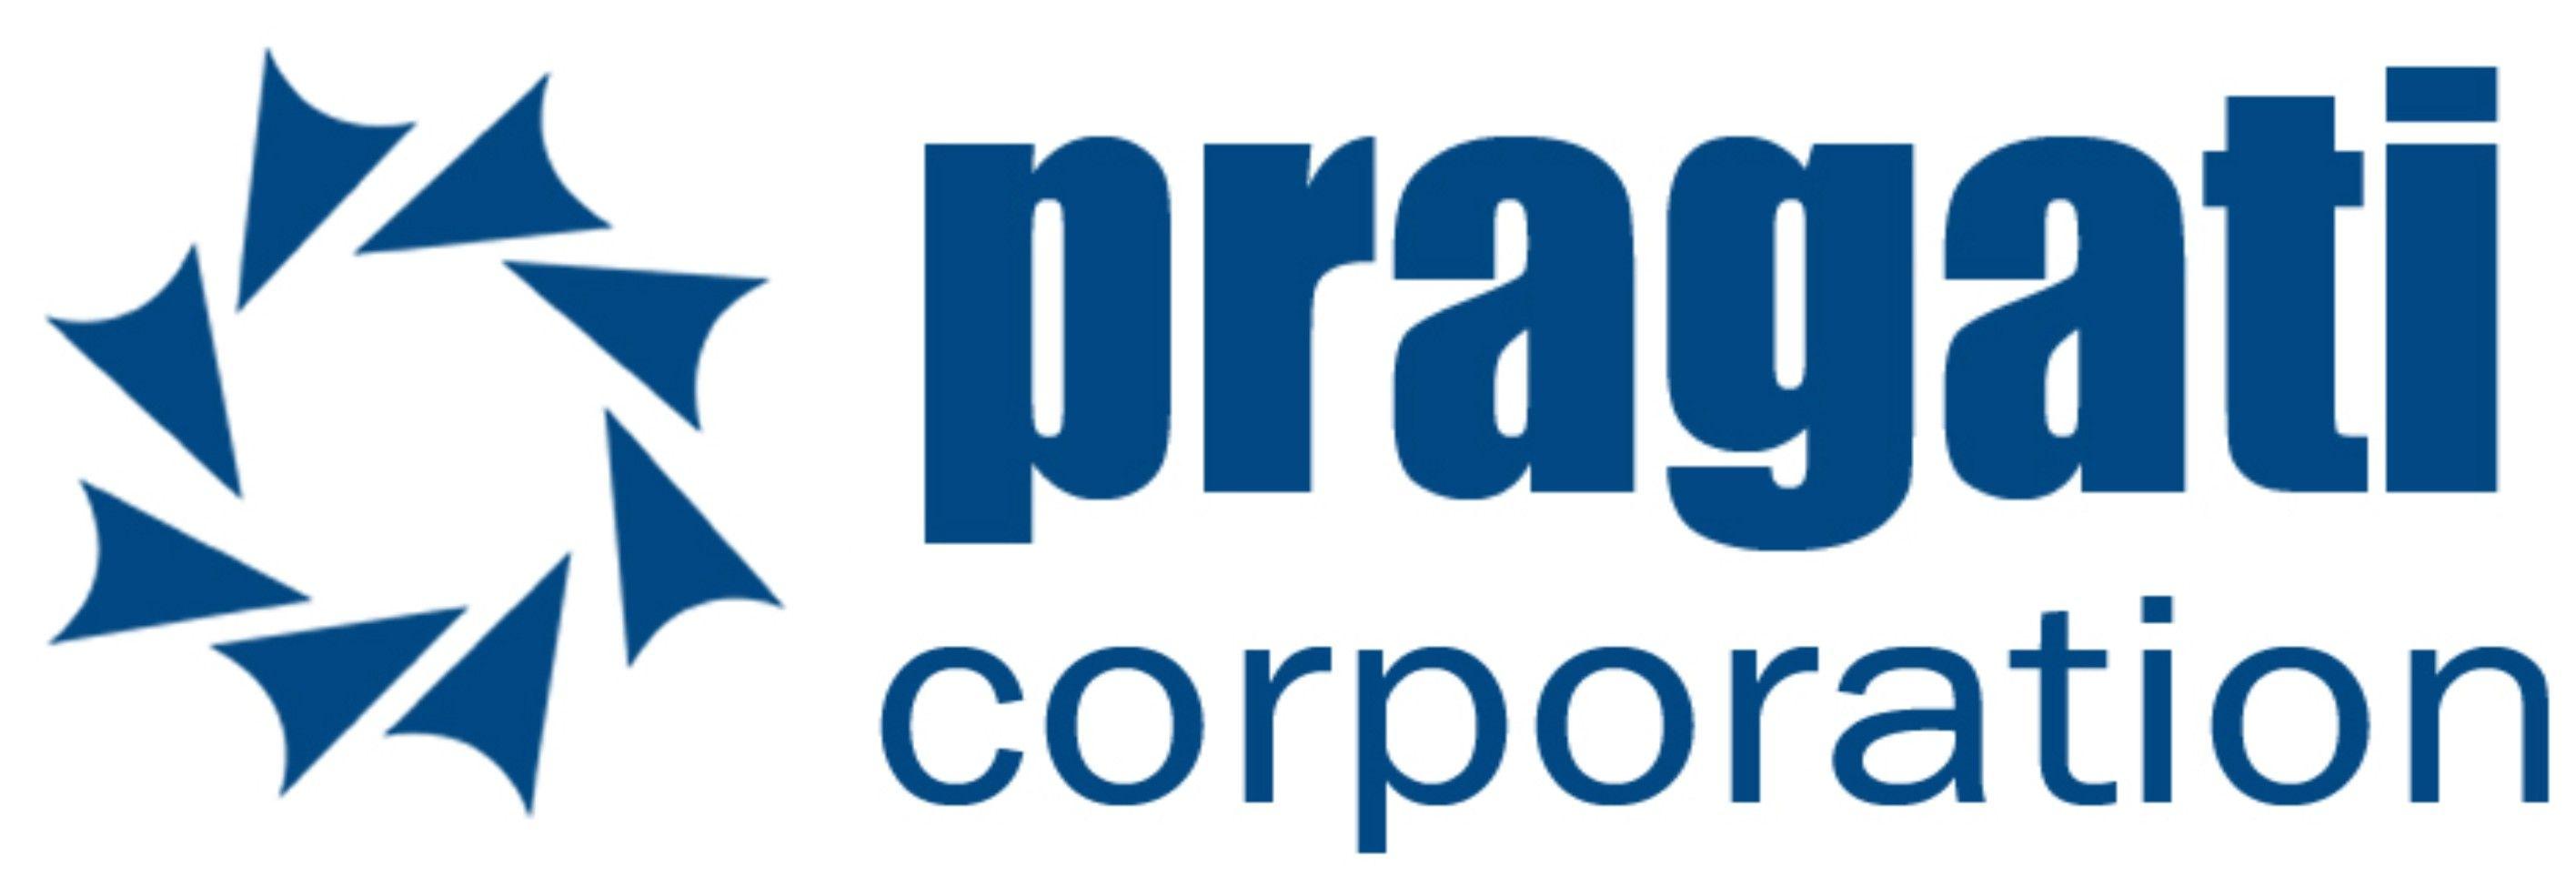 Pragati Corporation